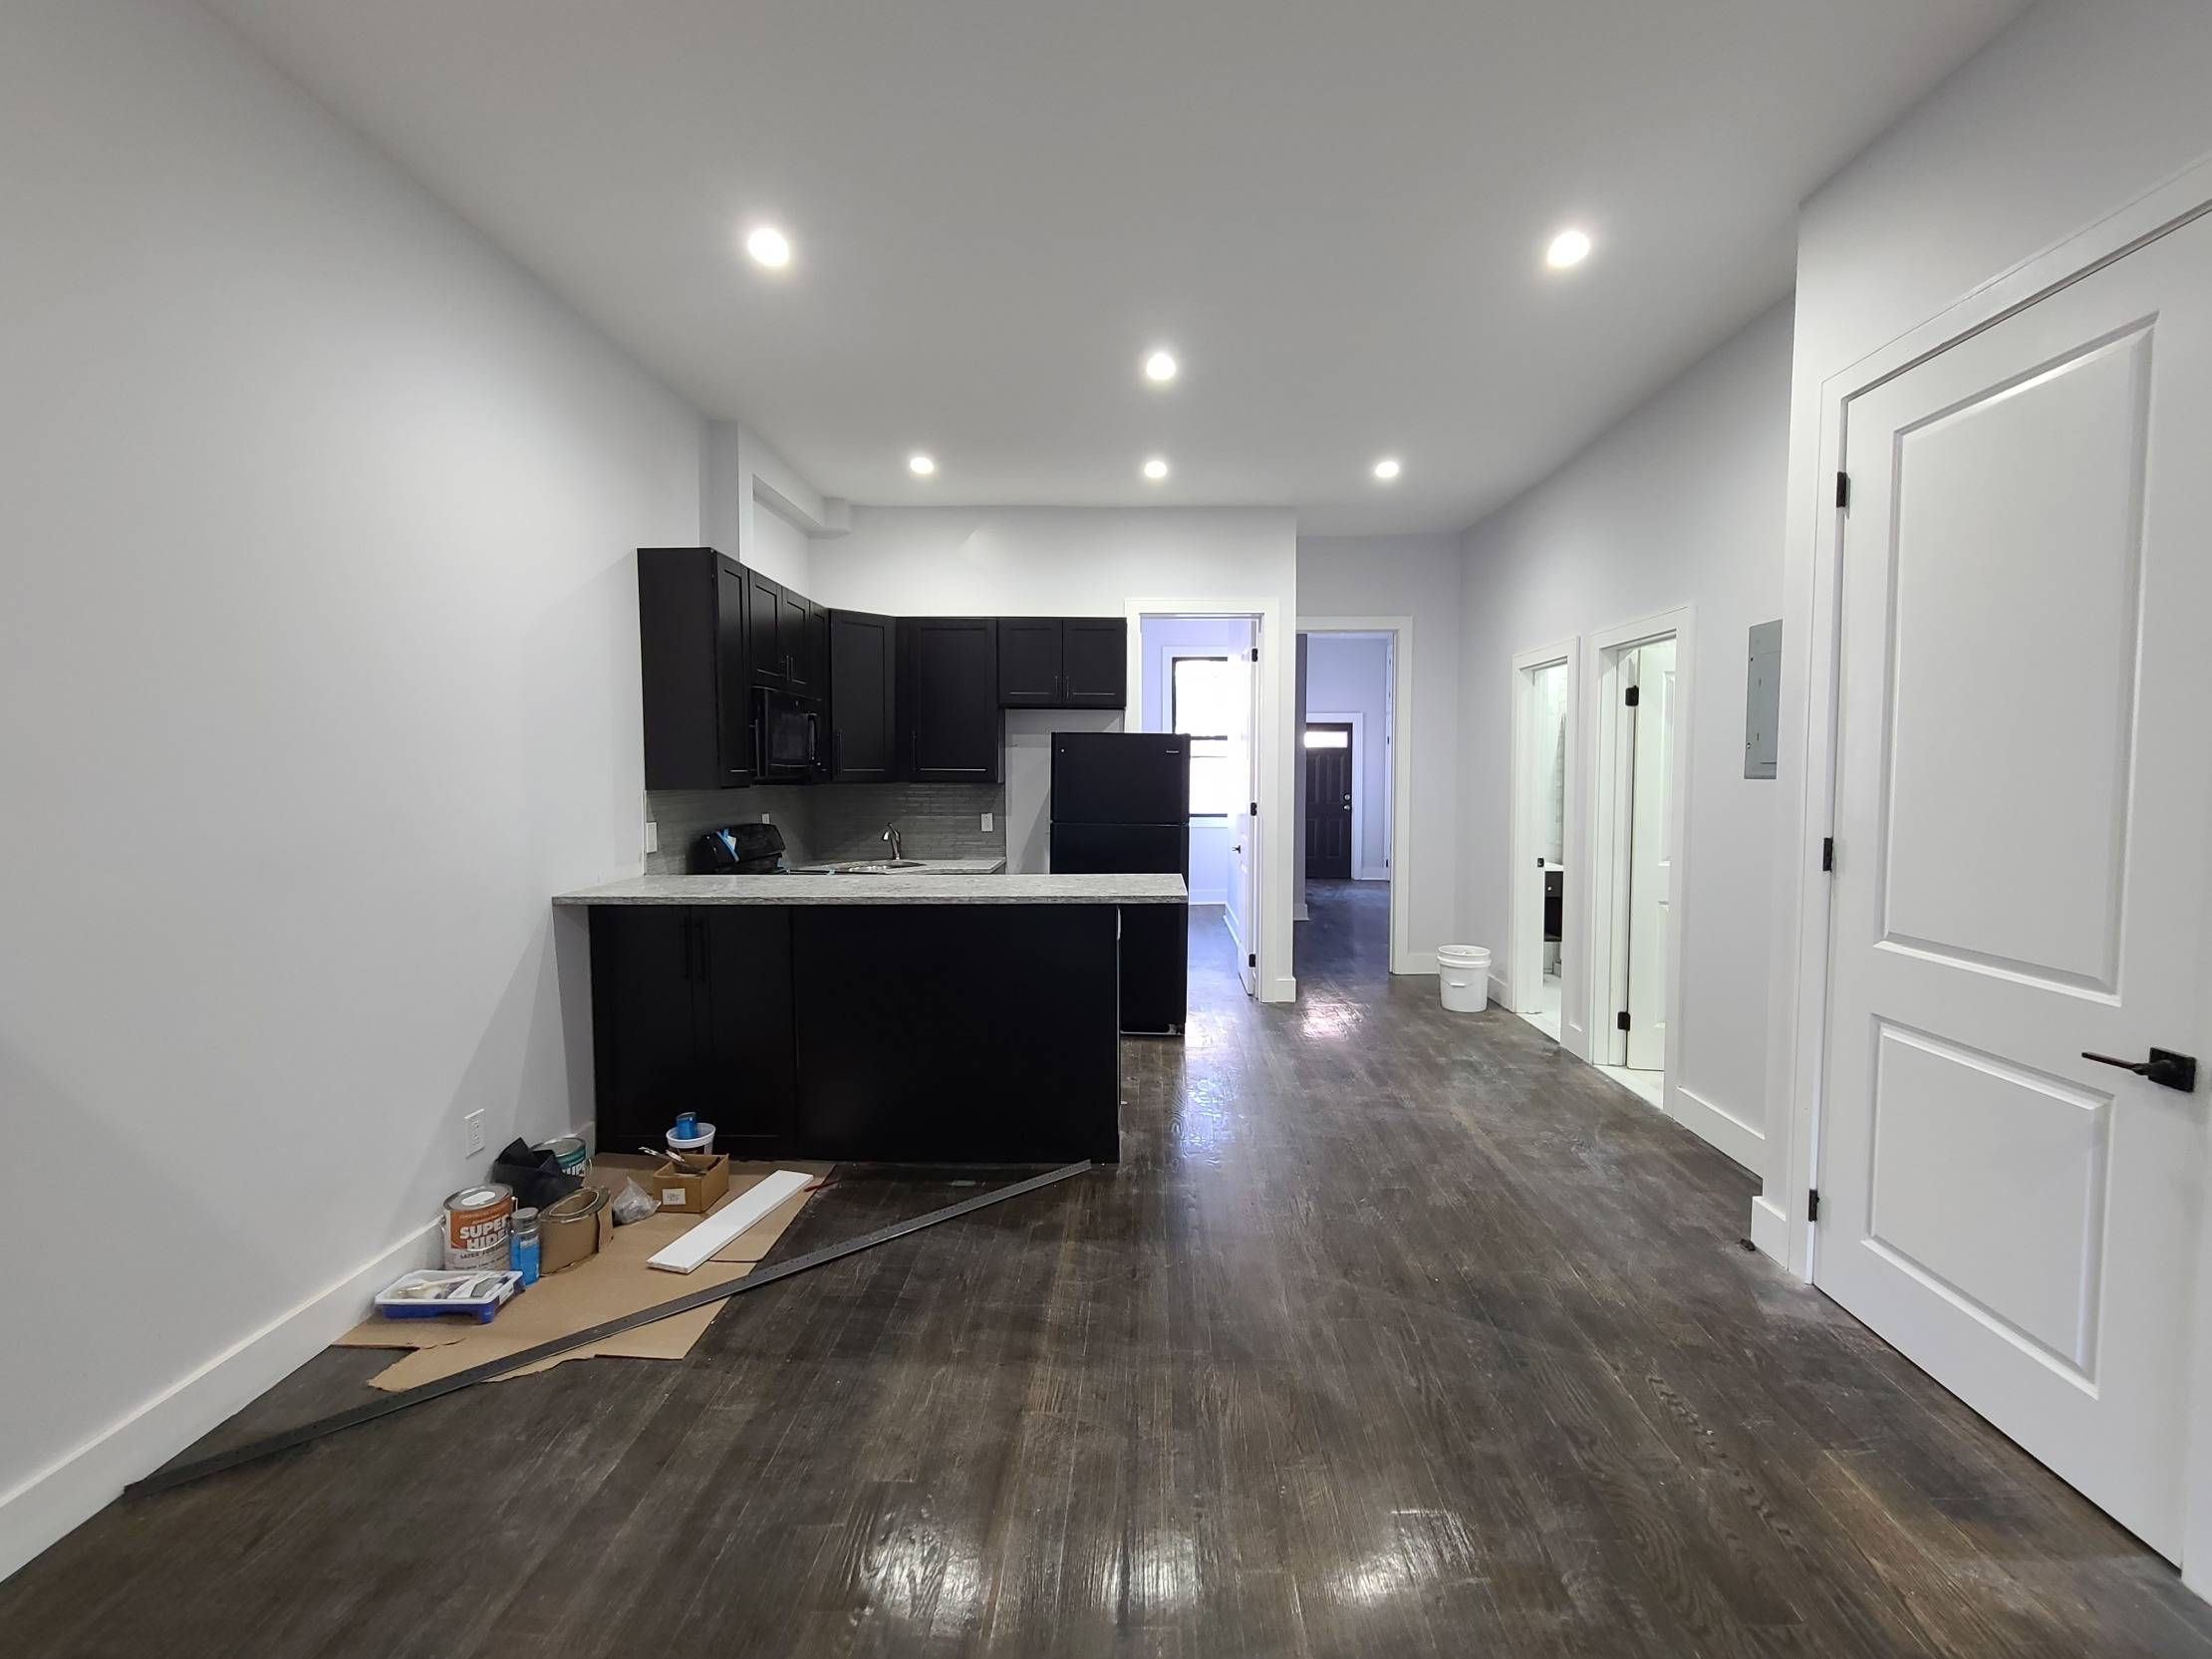 Floor through, 3 bedroom, 2 bathroom apartment available in Bushwick.